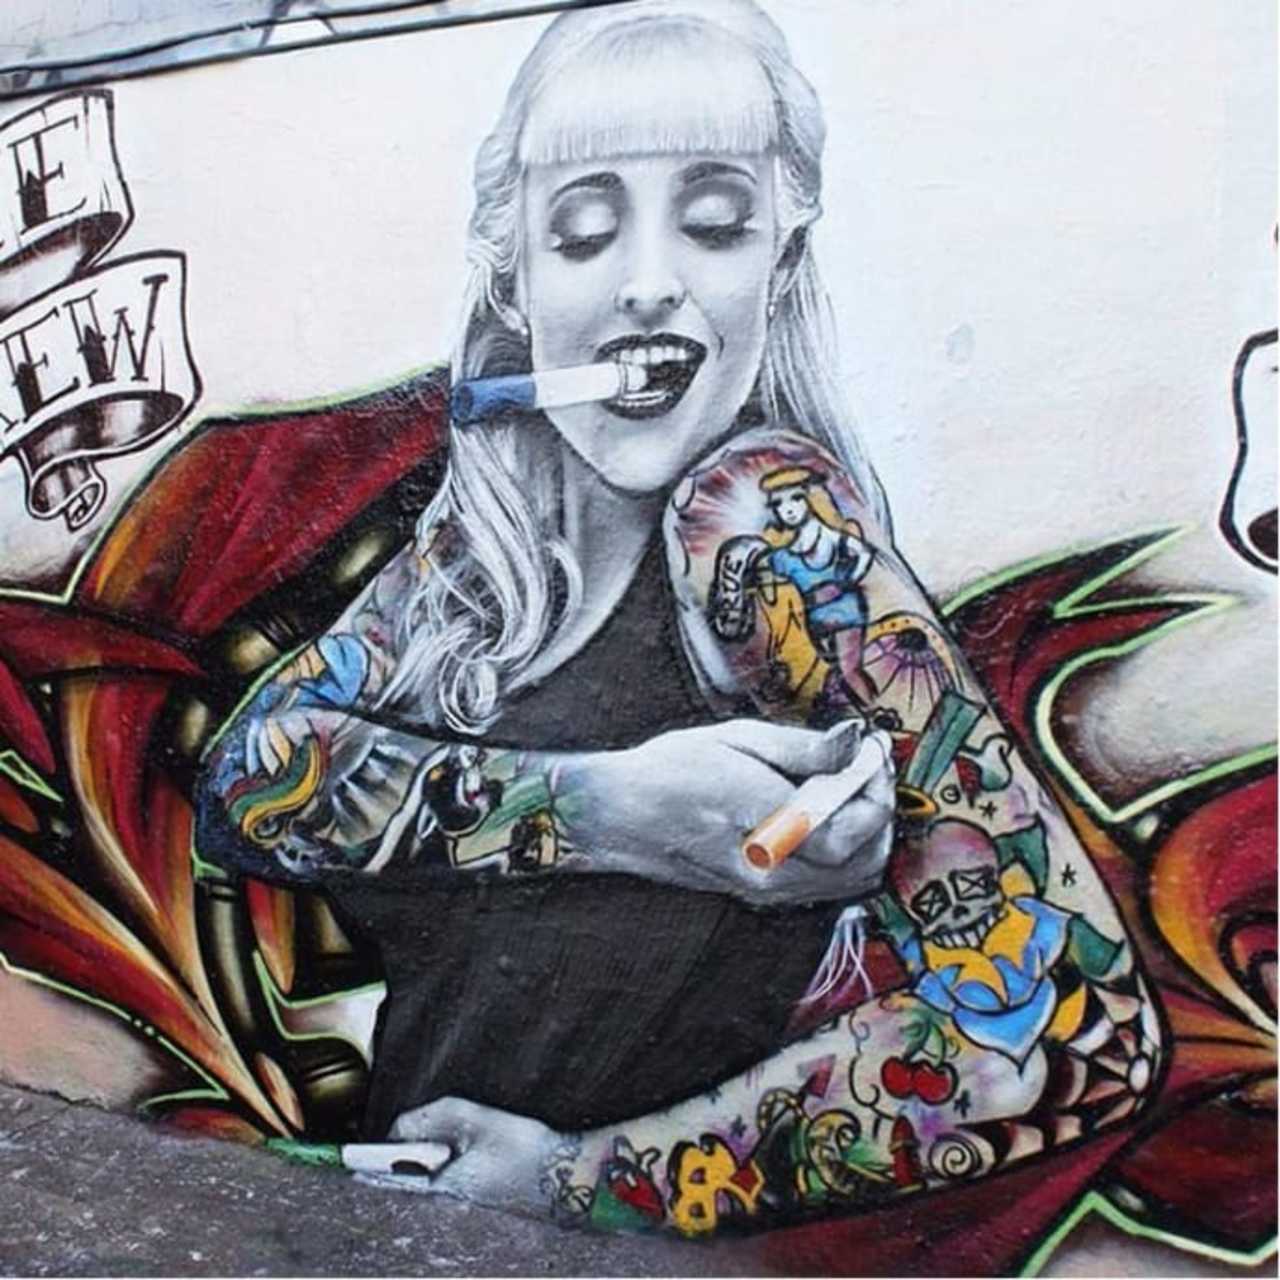 #Streetart by Flow TWE #Art #Mural #Tattoos #Graffiti https://t.co/893Rkj3SGf